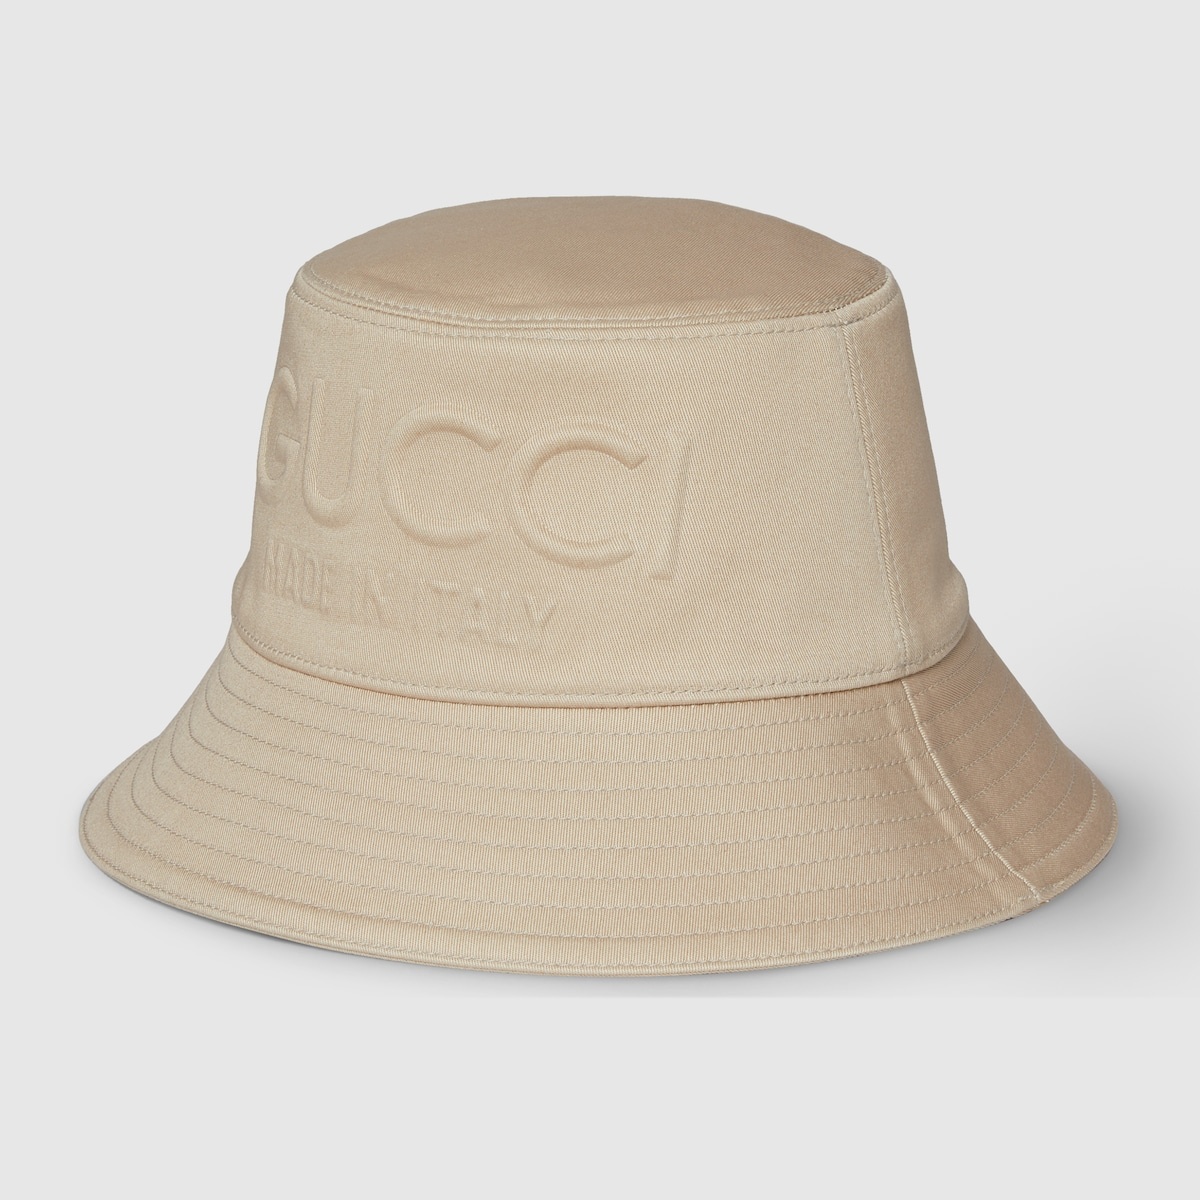 Gucci embossed bucket hat - 1